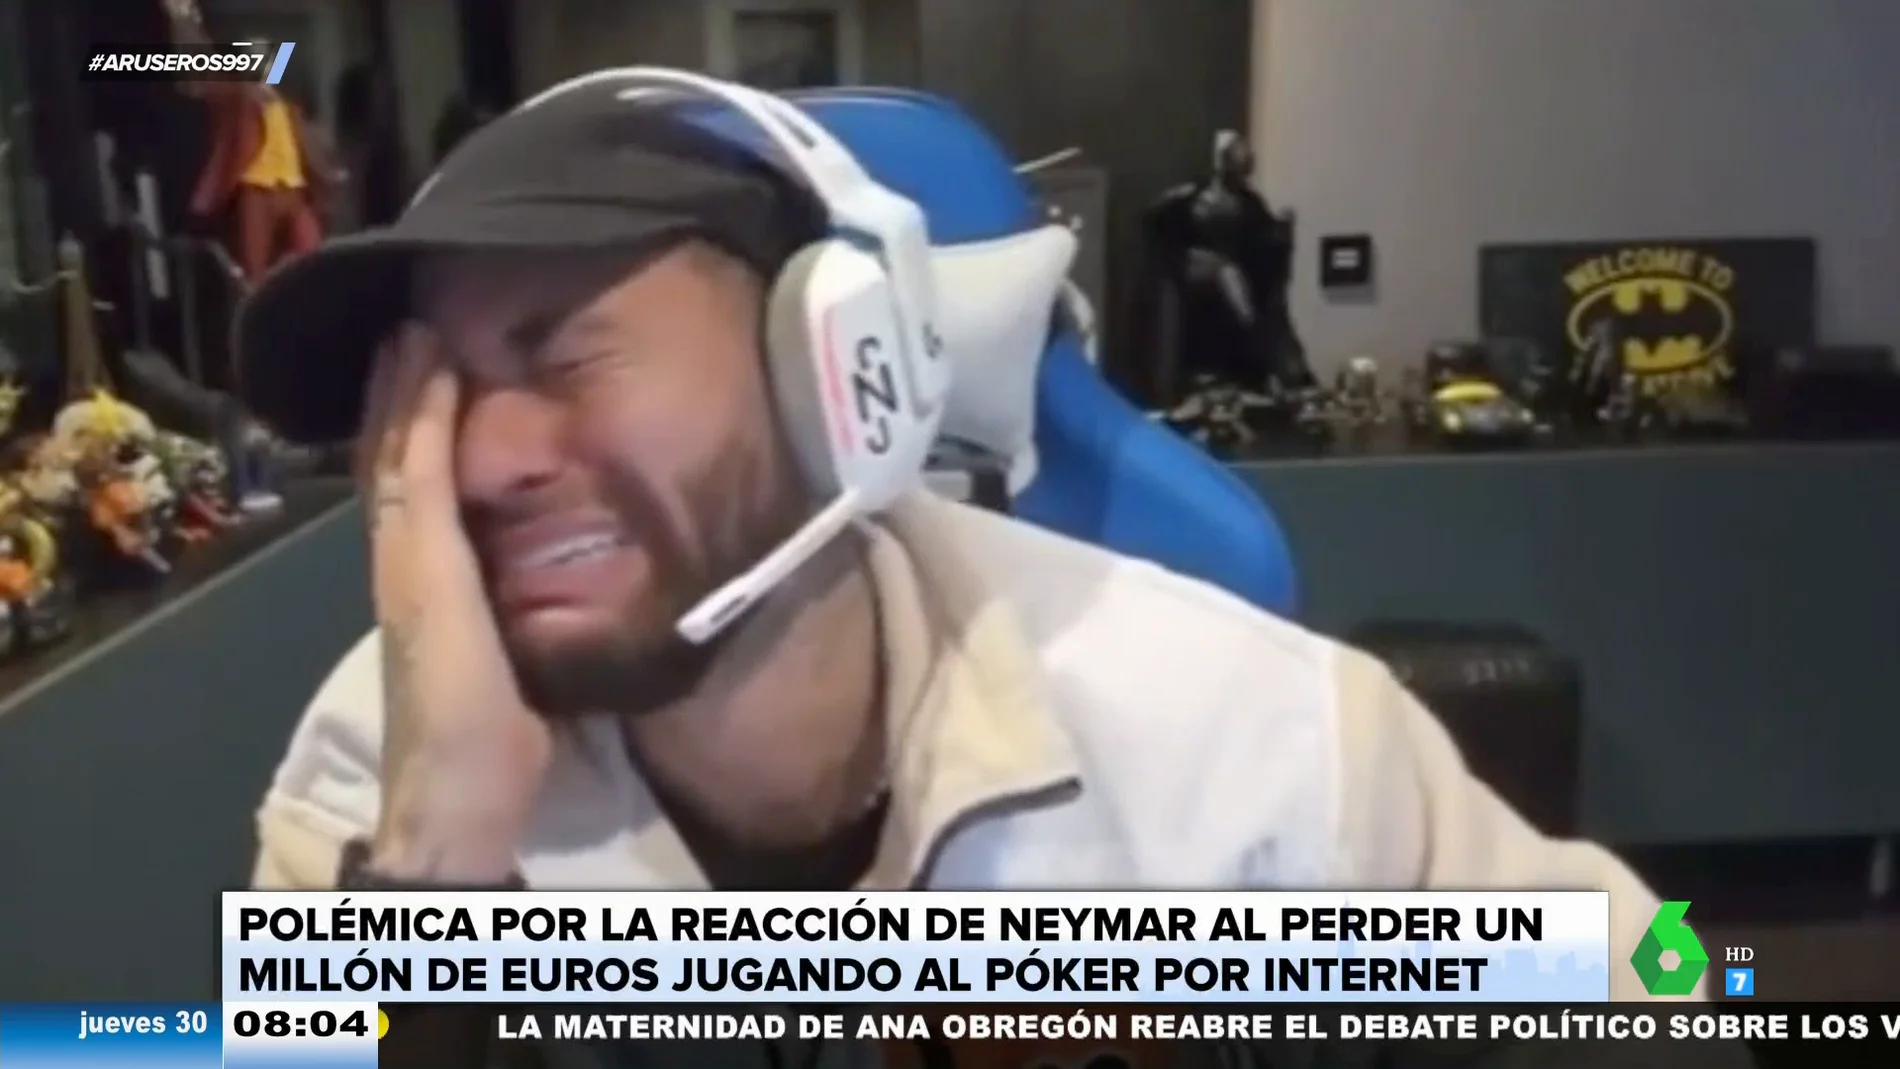 La polémica reacción de Neymar al perder un millón de euros al póker que indigna a Alfonso Arús